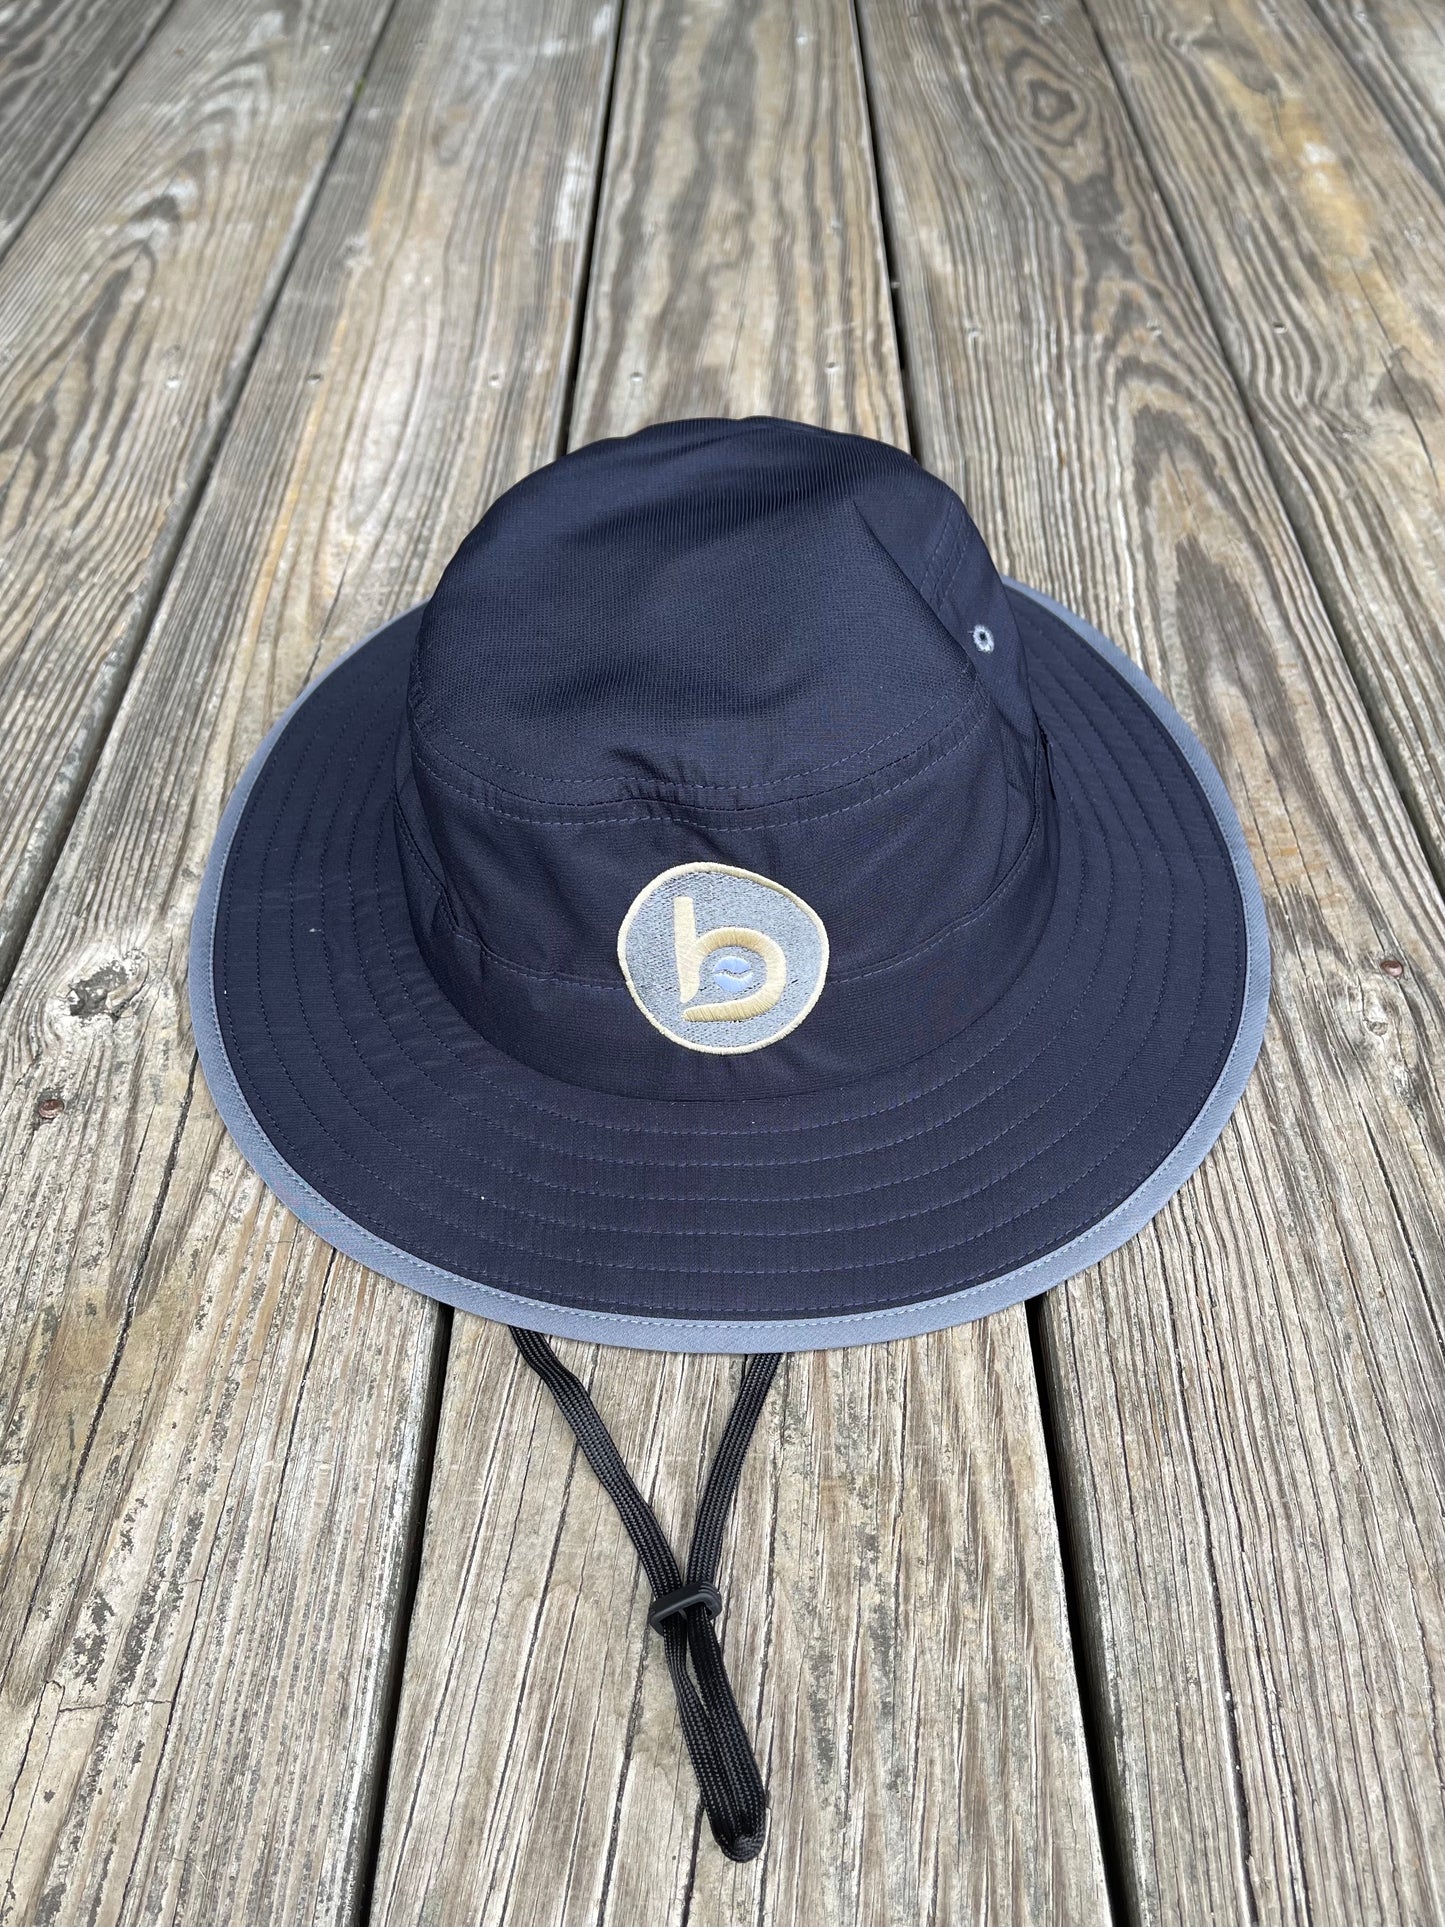 Bradley Baseball Bucket/Boonie hat (circle b logo)